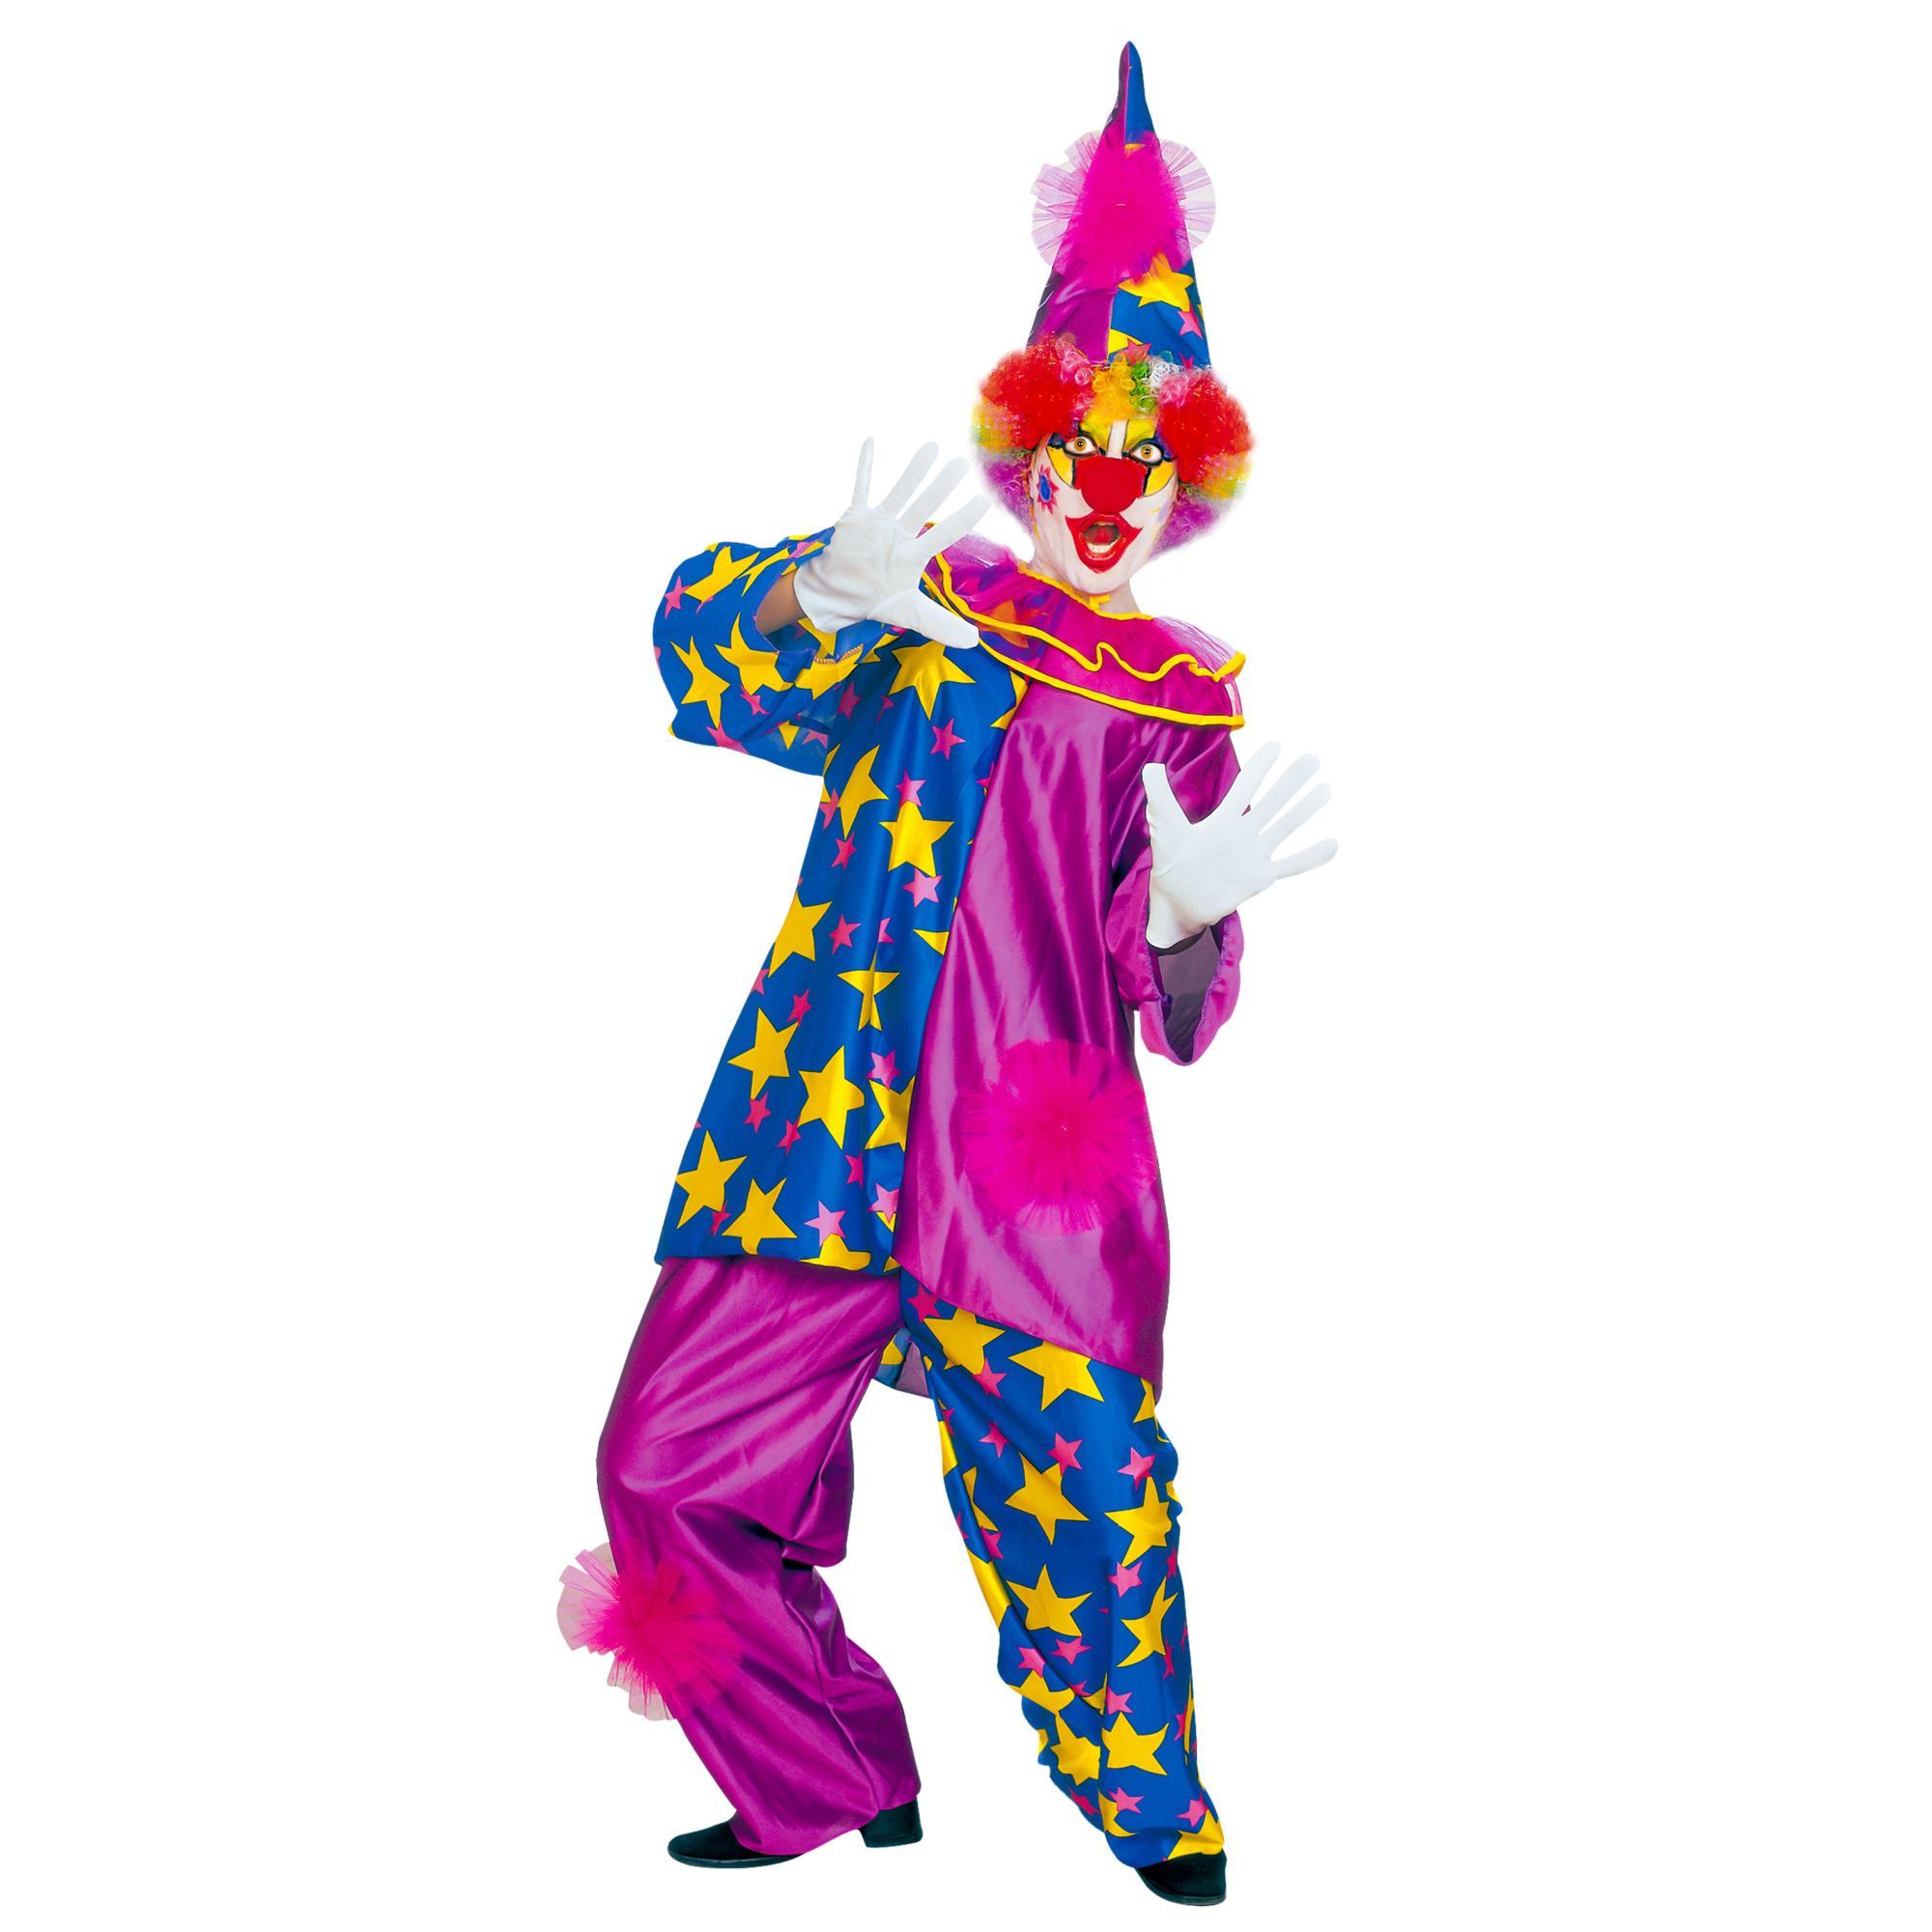 Lollig clown kostuum kind